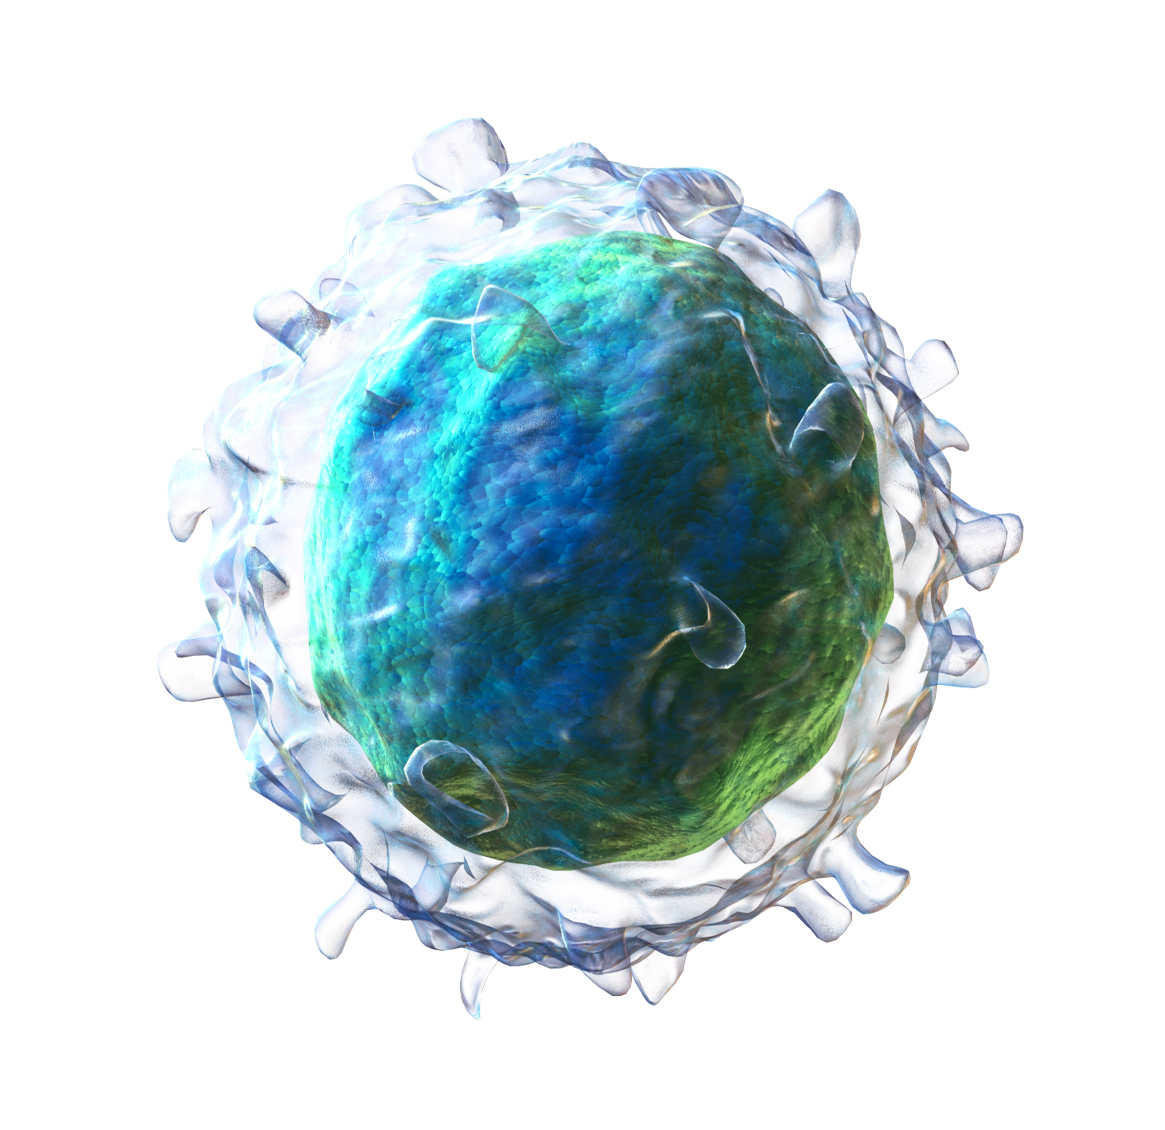 Illustration of a B-cell lymphocyte